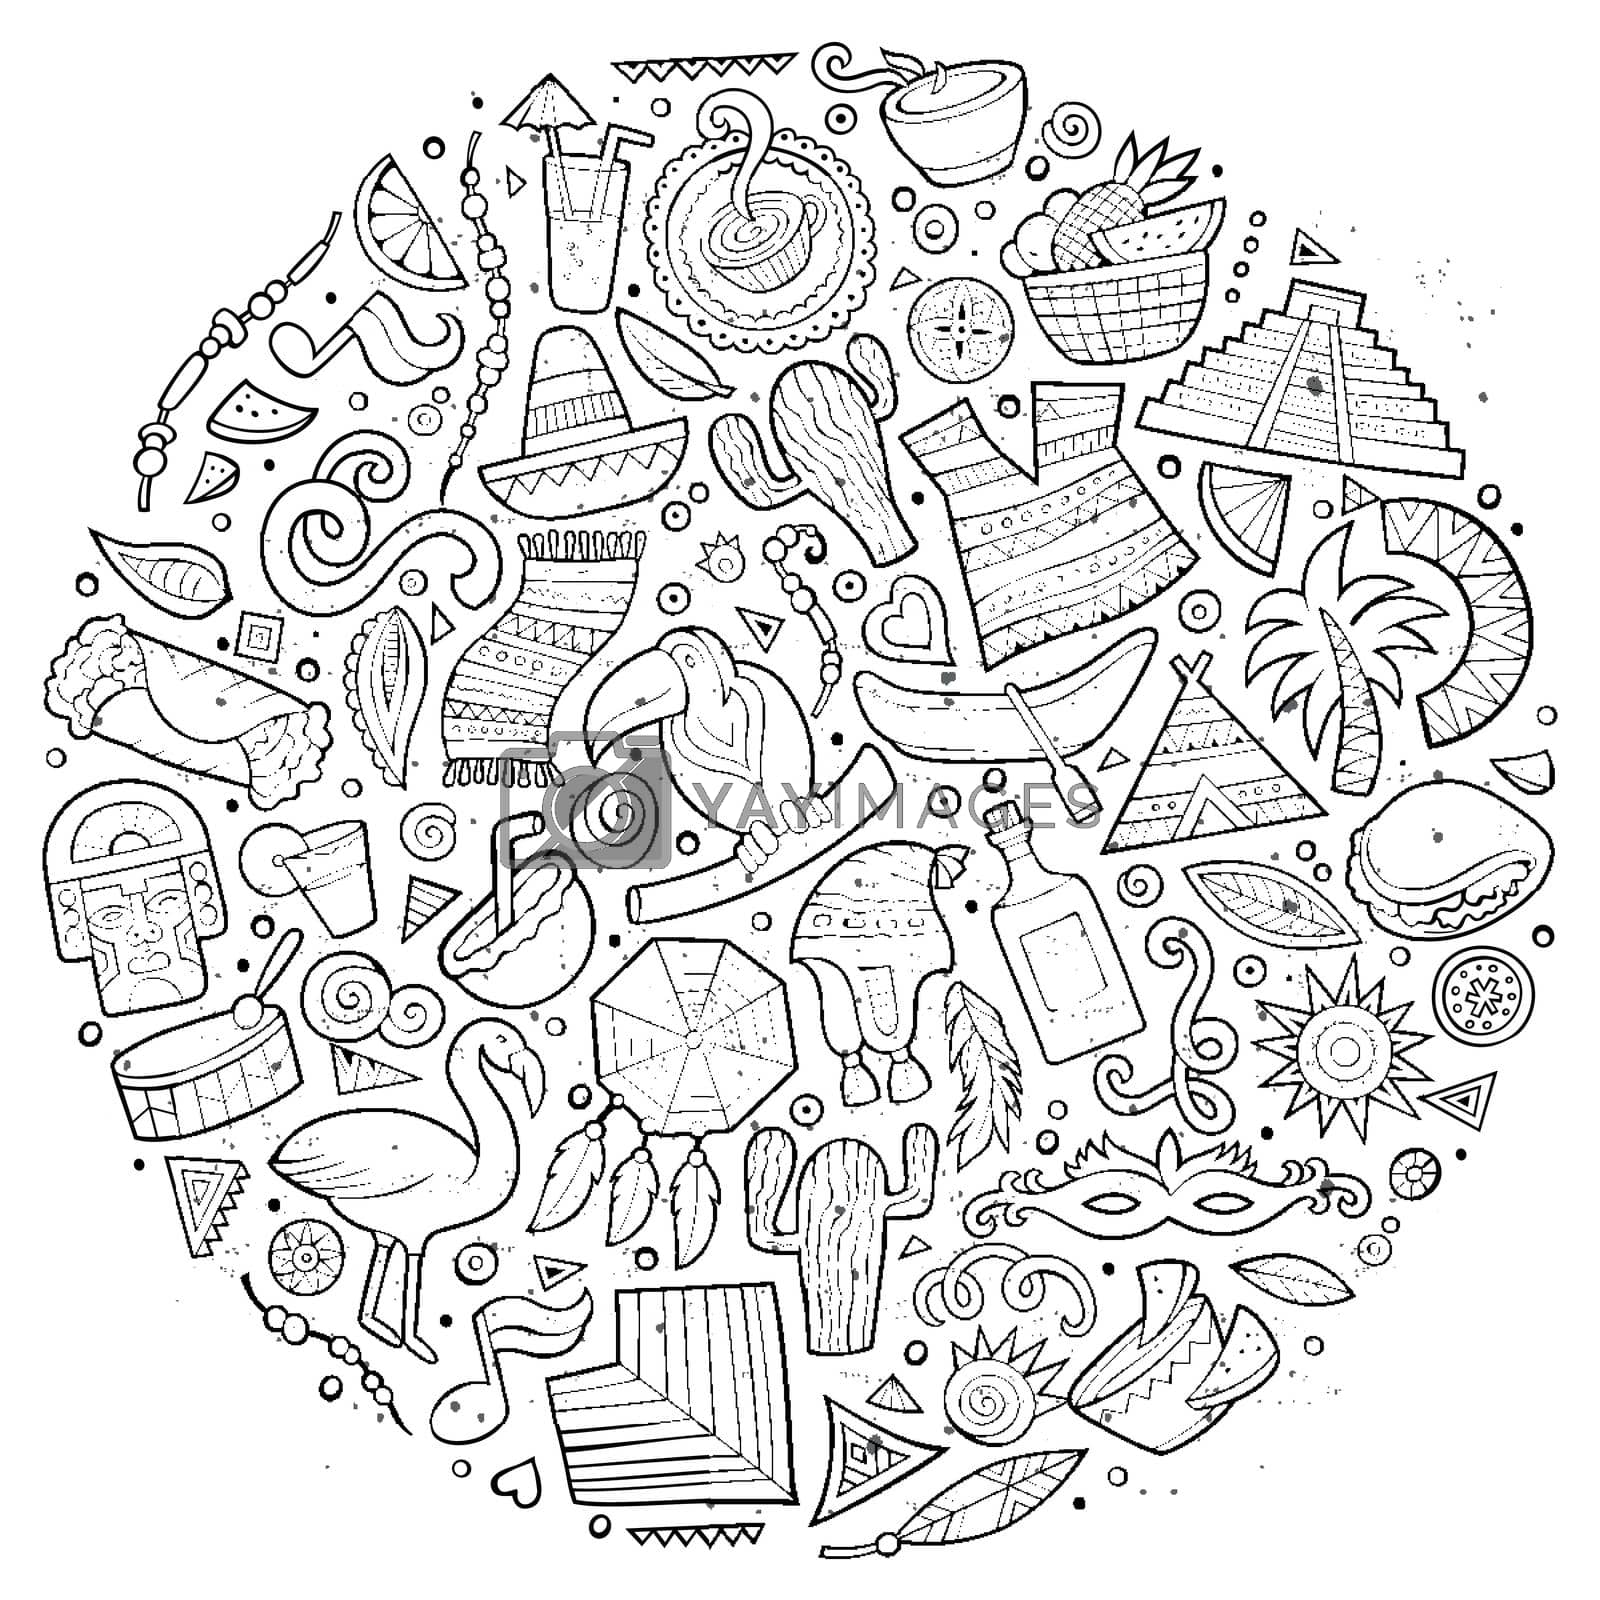 Royalty free image of Line art vector hand drawn doodle cartoon set of Latin American by balabolka